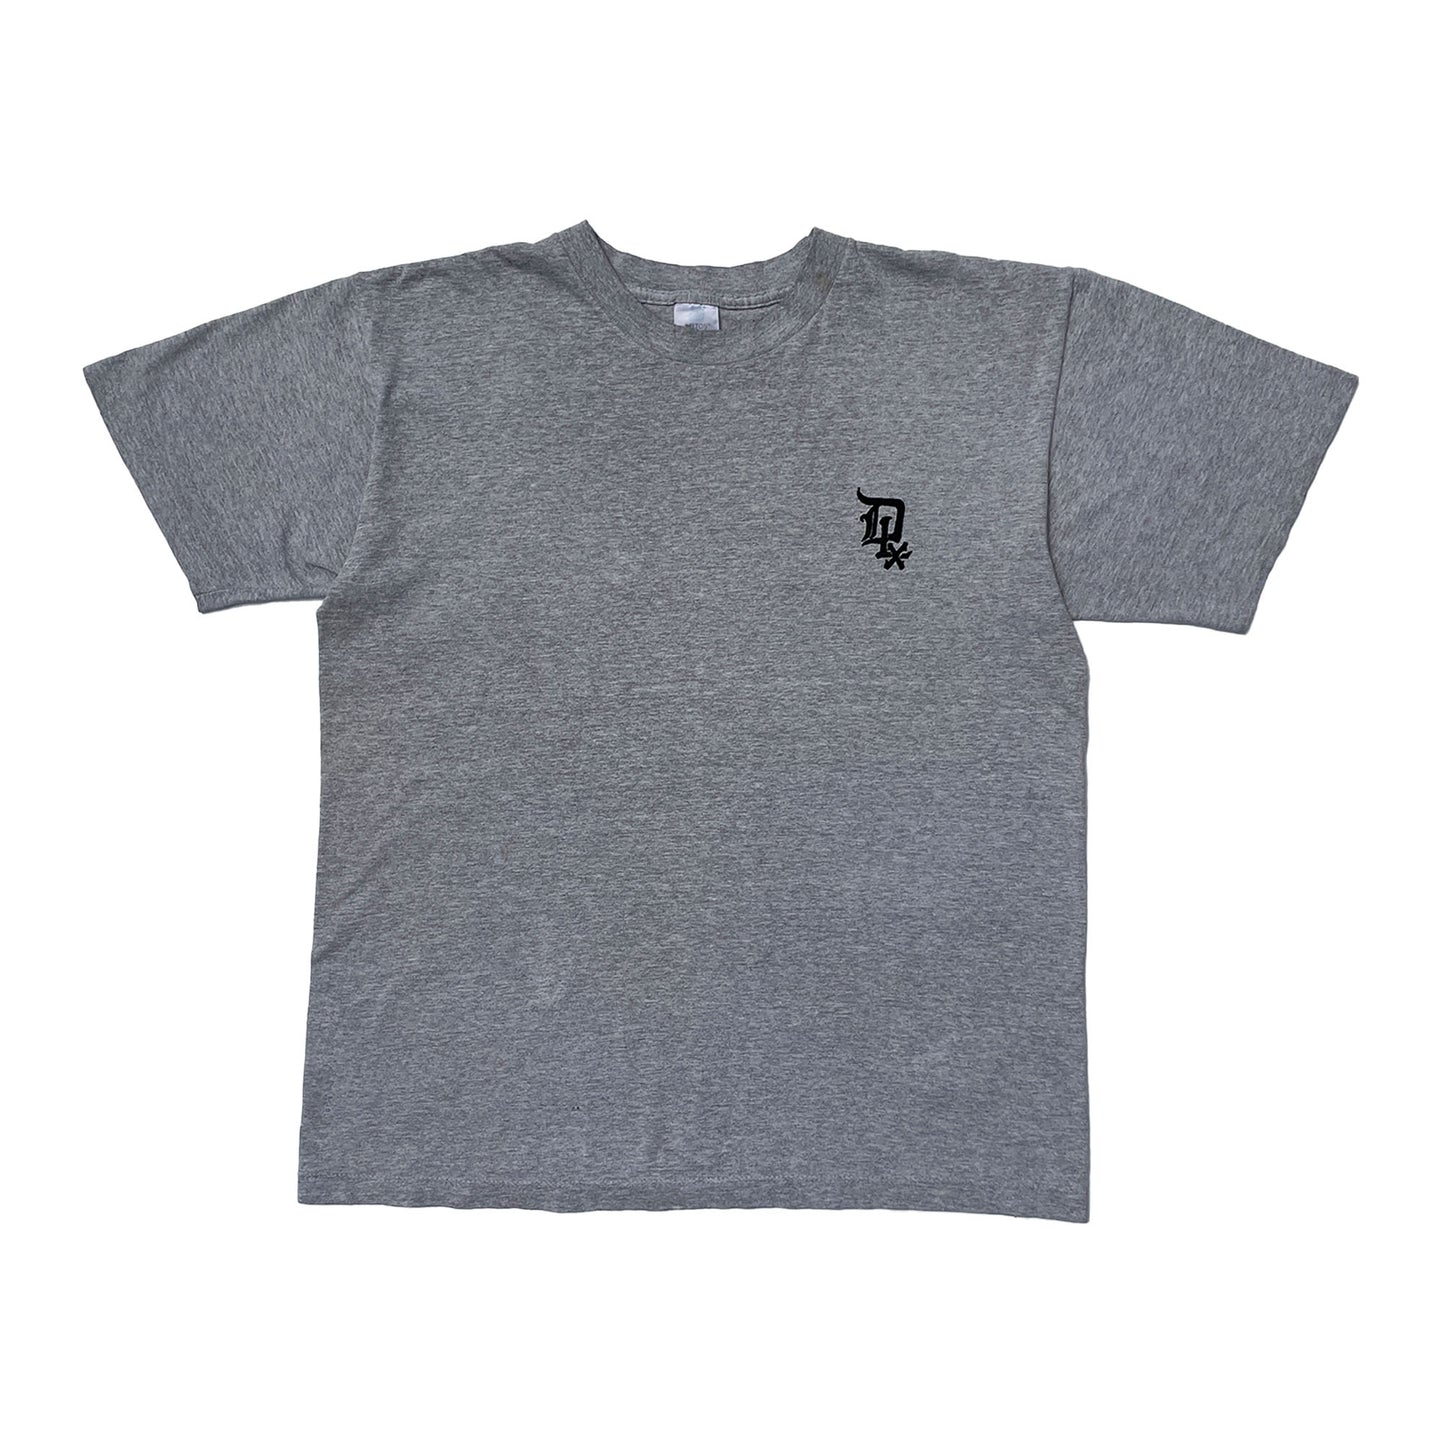 Deluxe DLX Grey Skate Single Stitched T-Shirt OG 90s